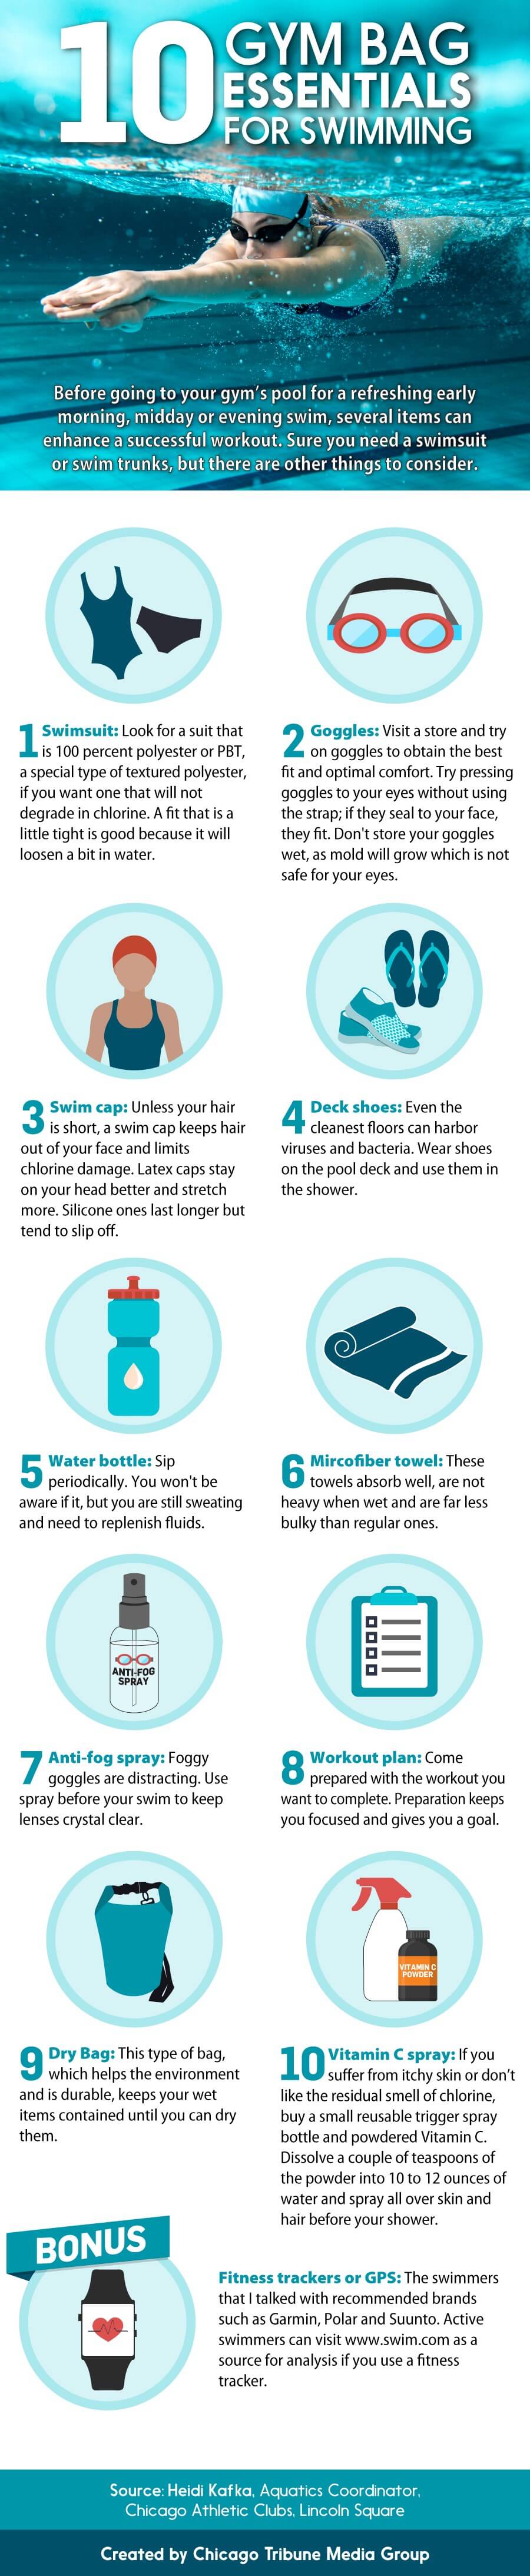 10 Gym Bag Essentials for Swimming